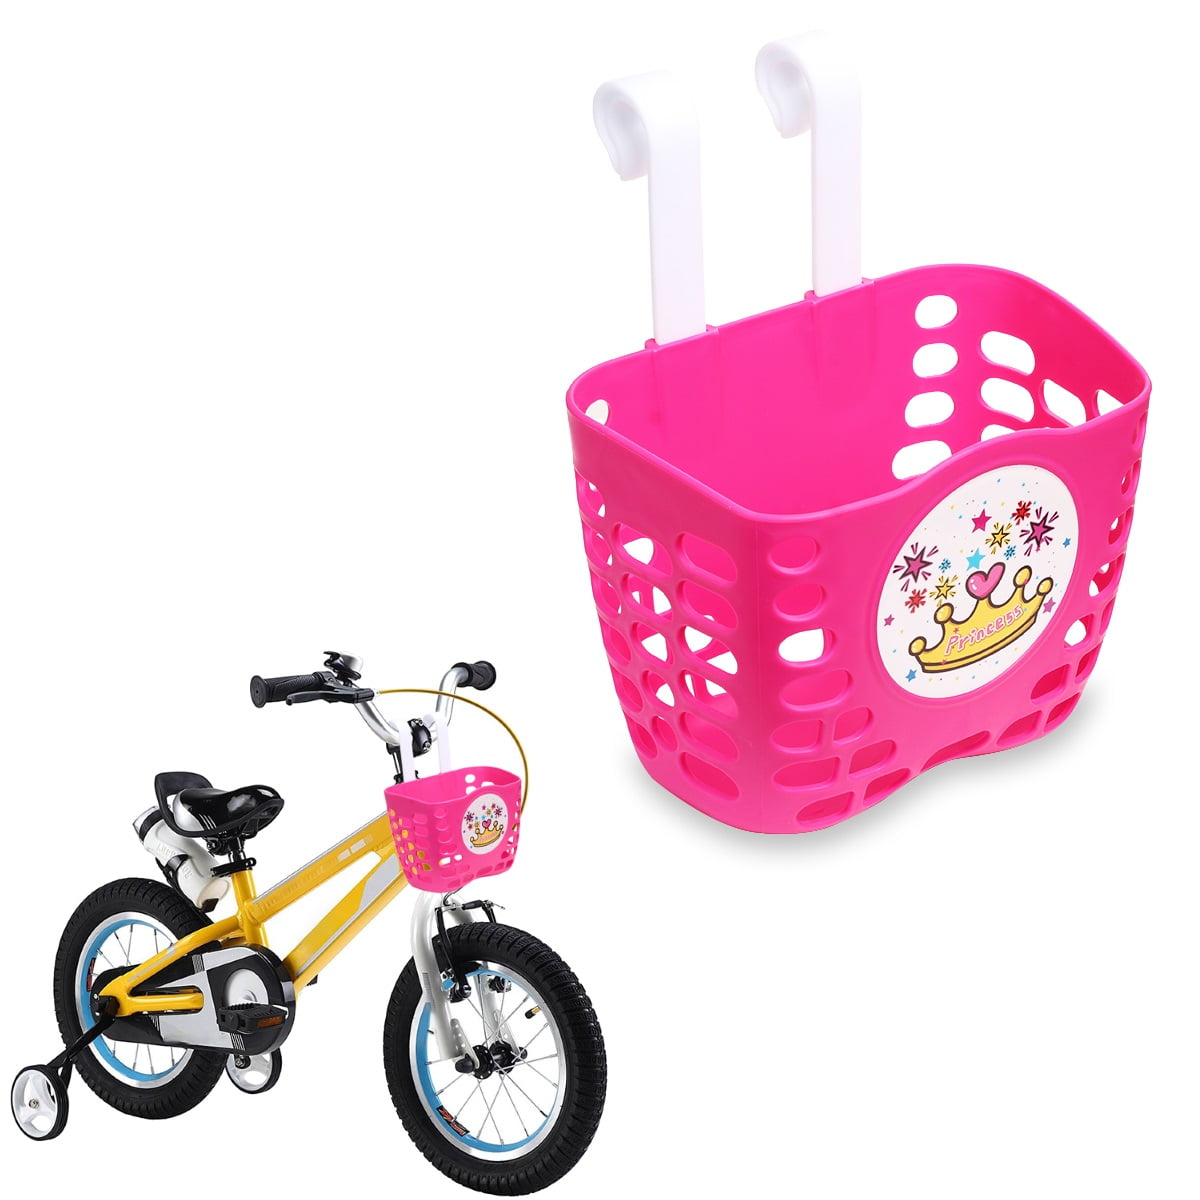 MINI-FACTORY Kids Bike Basket Pink Cute Princess Crown/Butterflies Pattern Bicycle Front Handlebar Basket for Kid Girls 